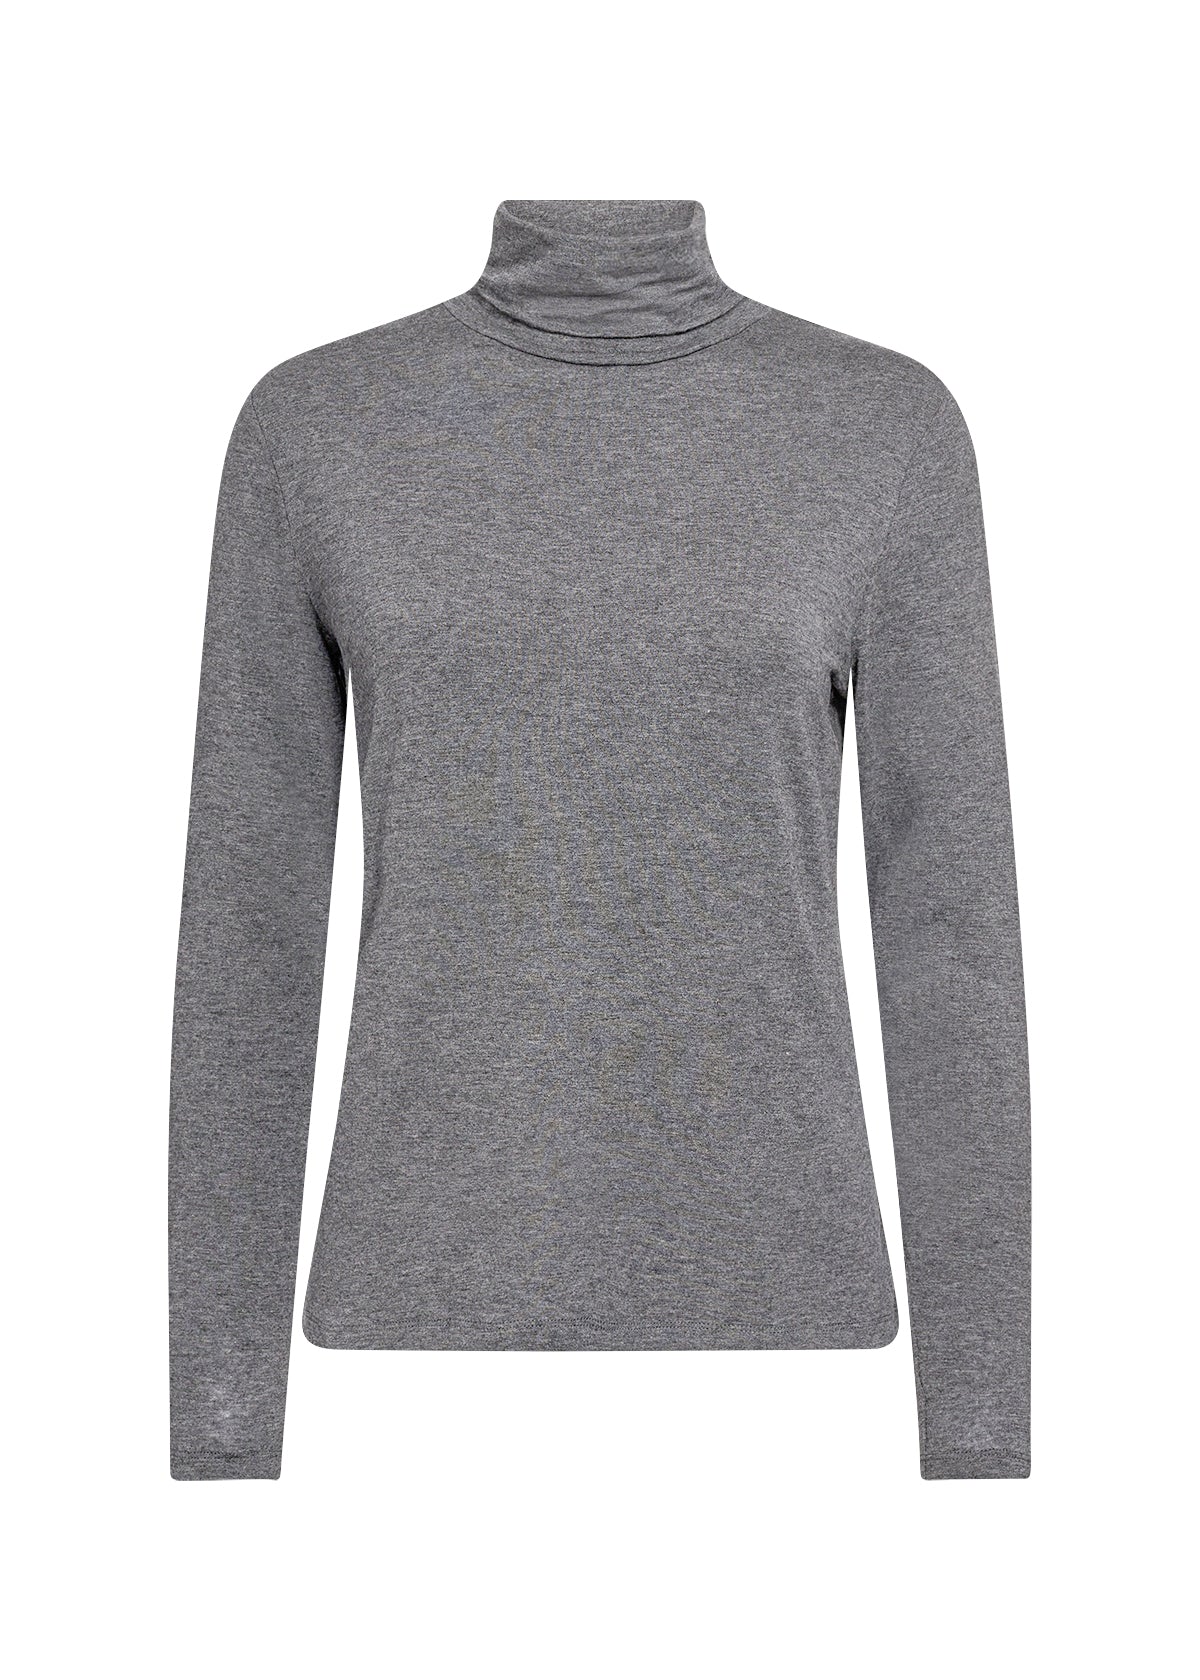 Soya Concept Tamar 2 Shirt in Dark Grey Melange 26320